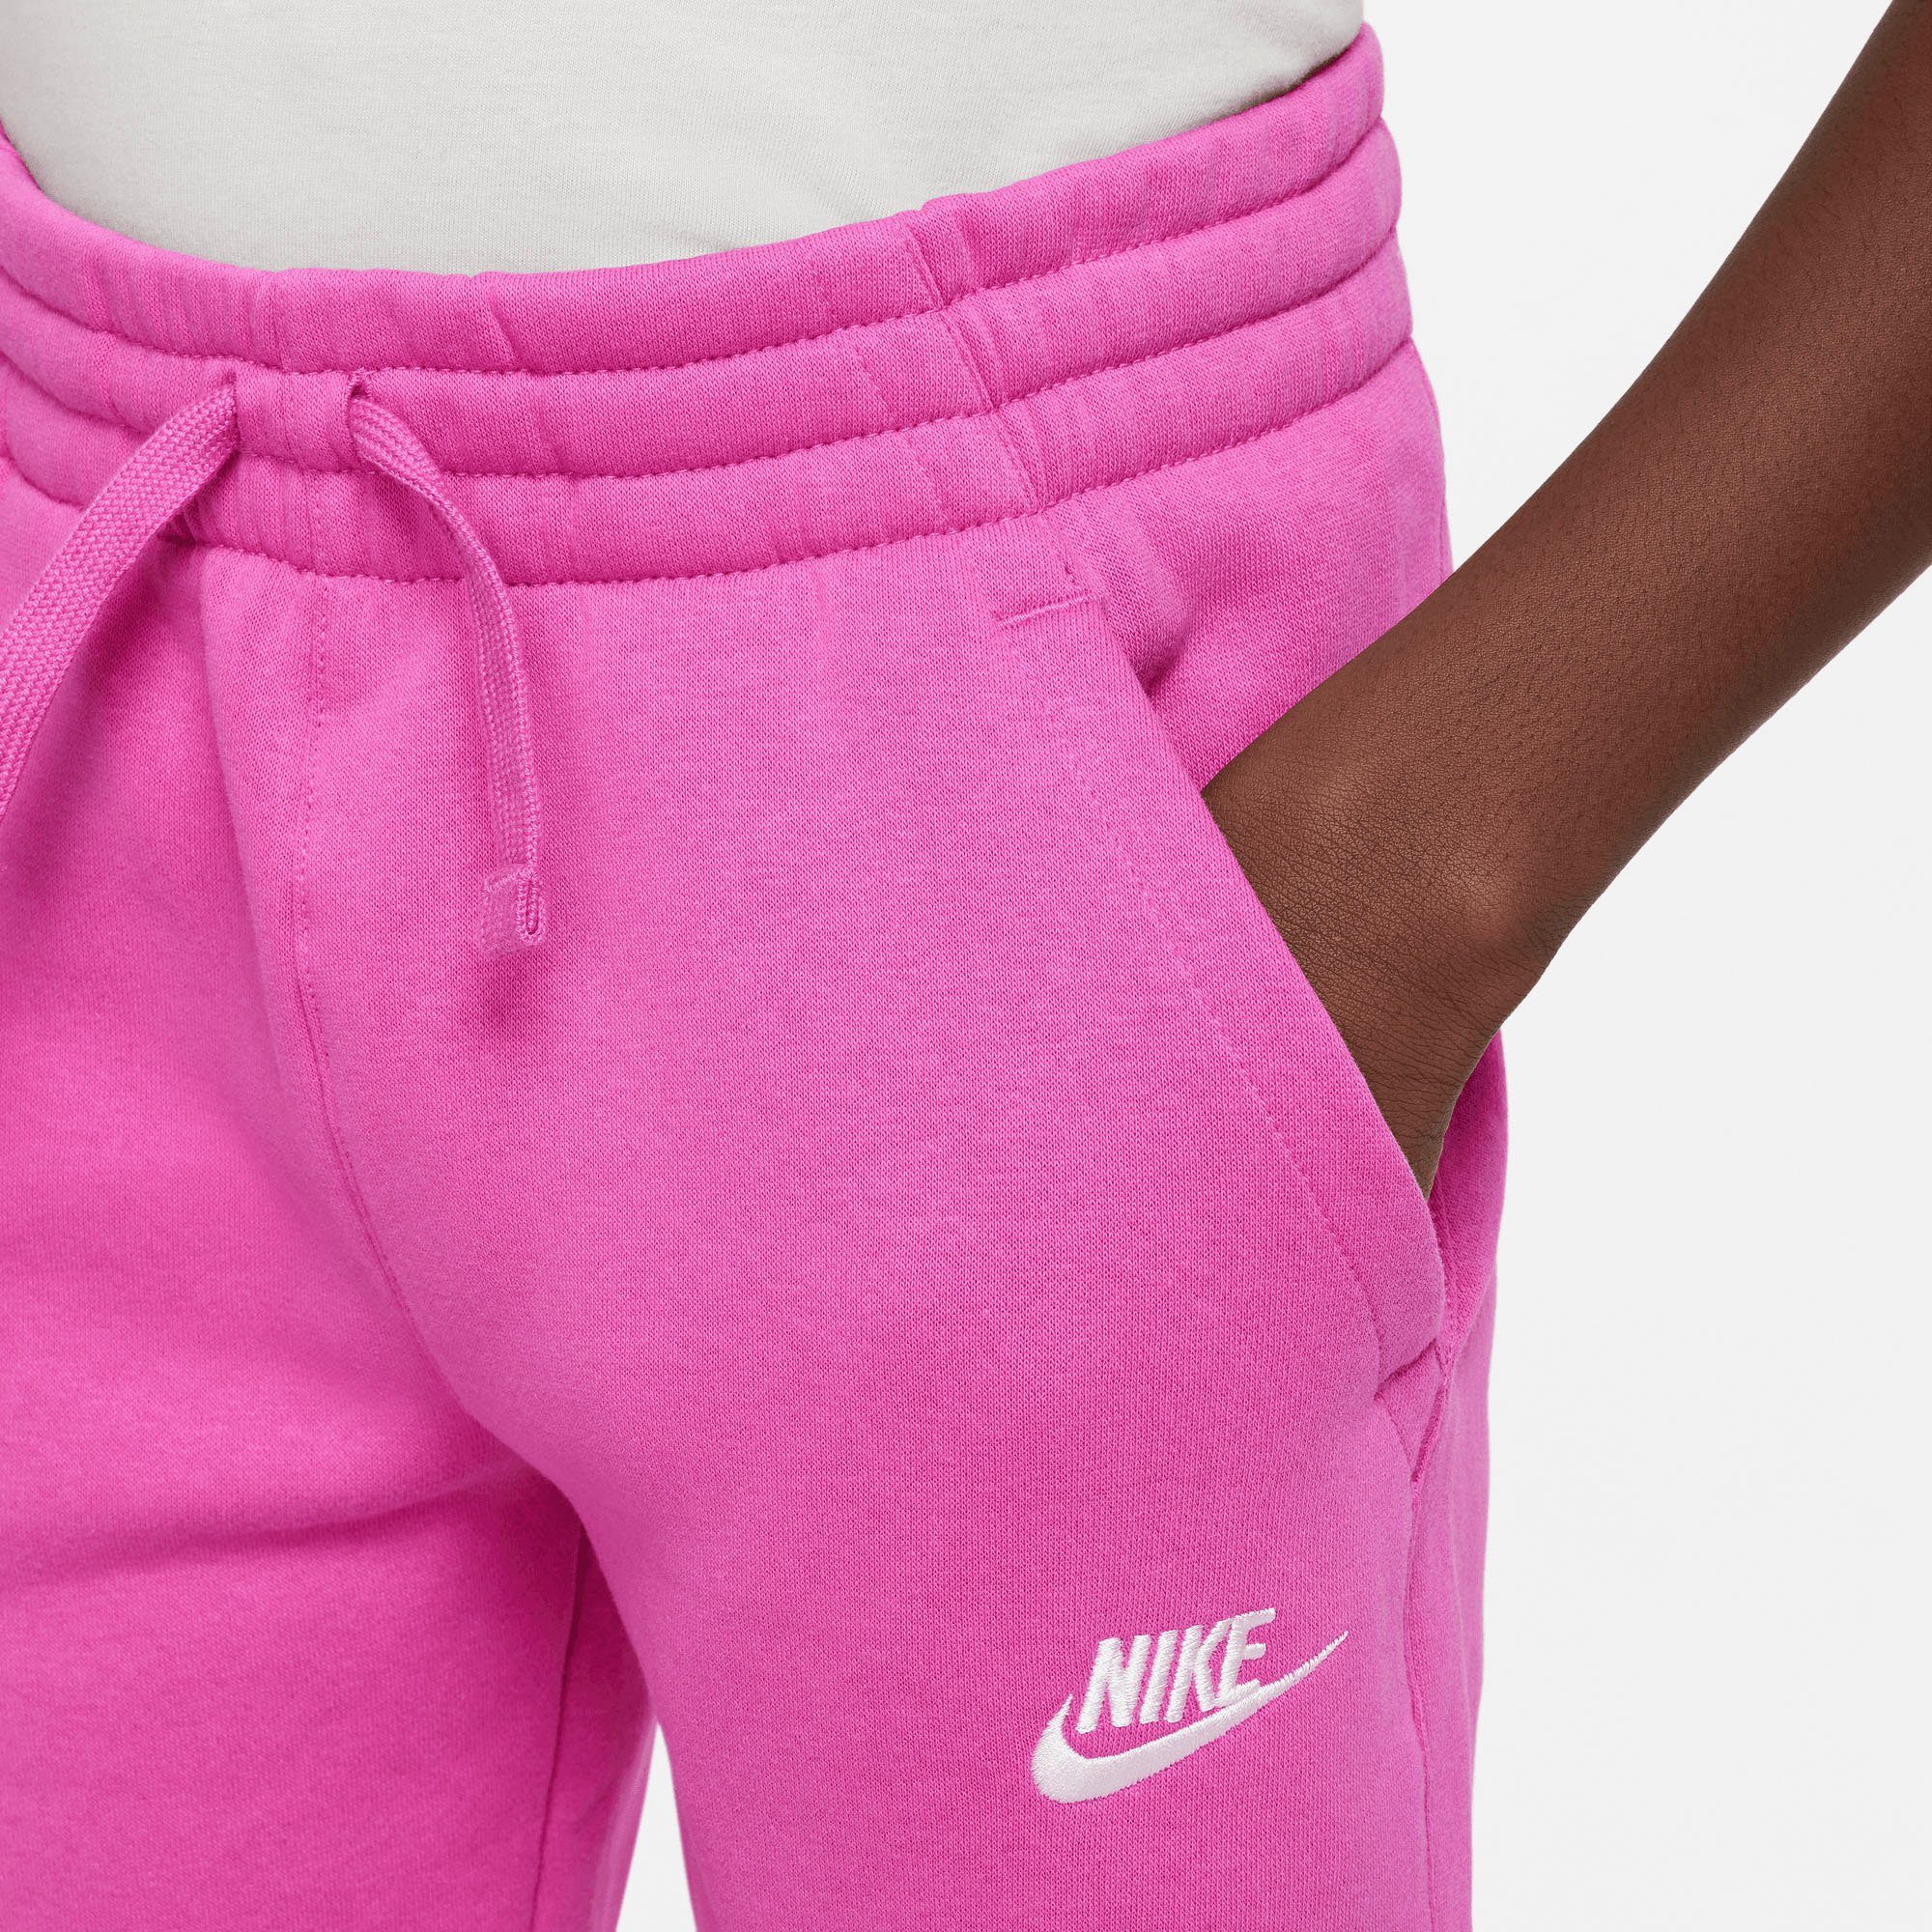 Nike Sportswear Jogginganzug NSW (Set, für CORE FUCHSIA/ACTIVE 2-tlg), Kinder FUCHSIA/WHITE ACTIVE